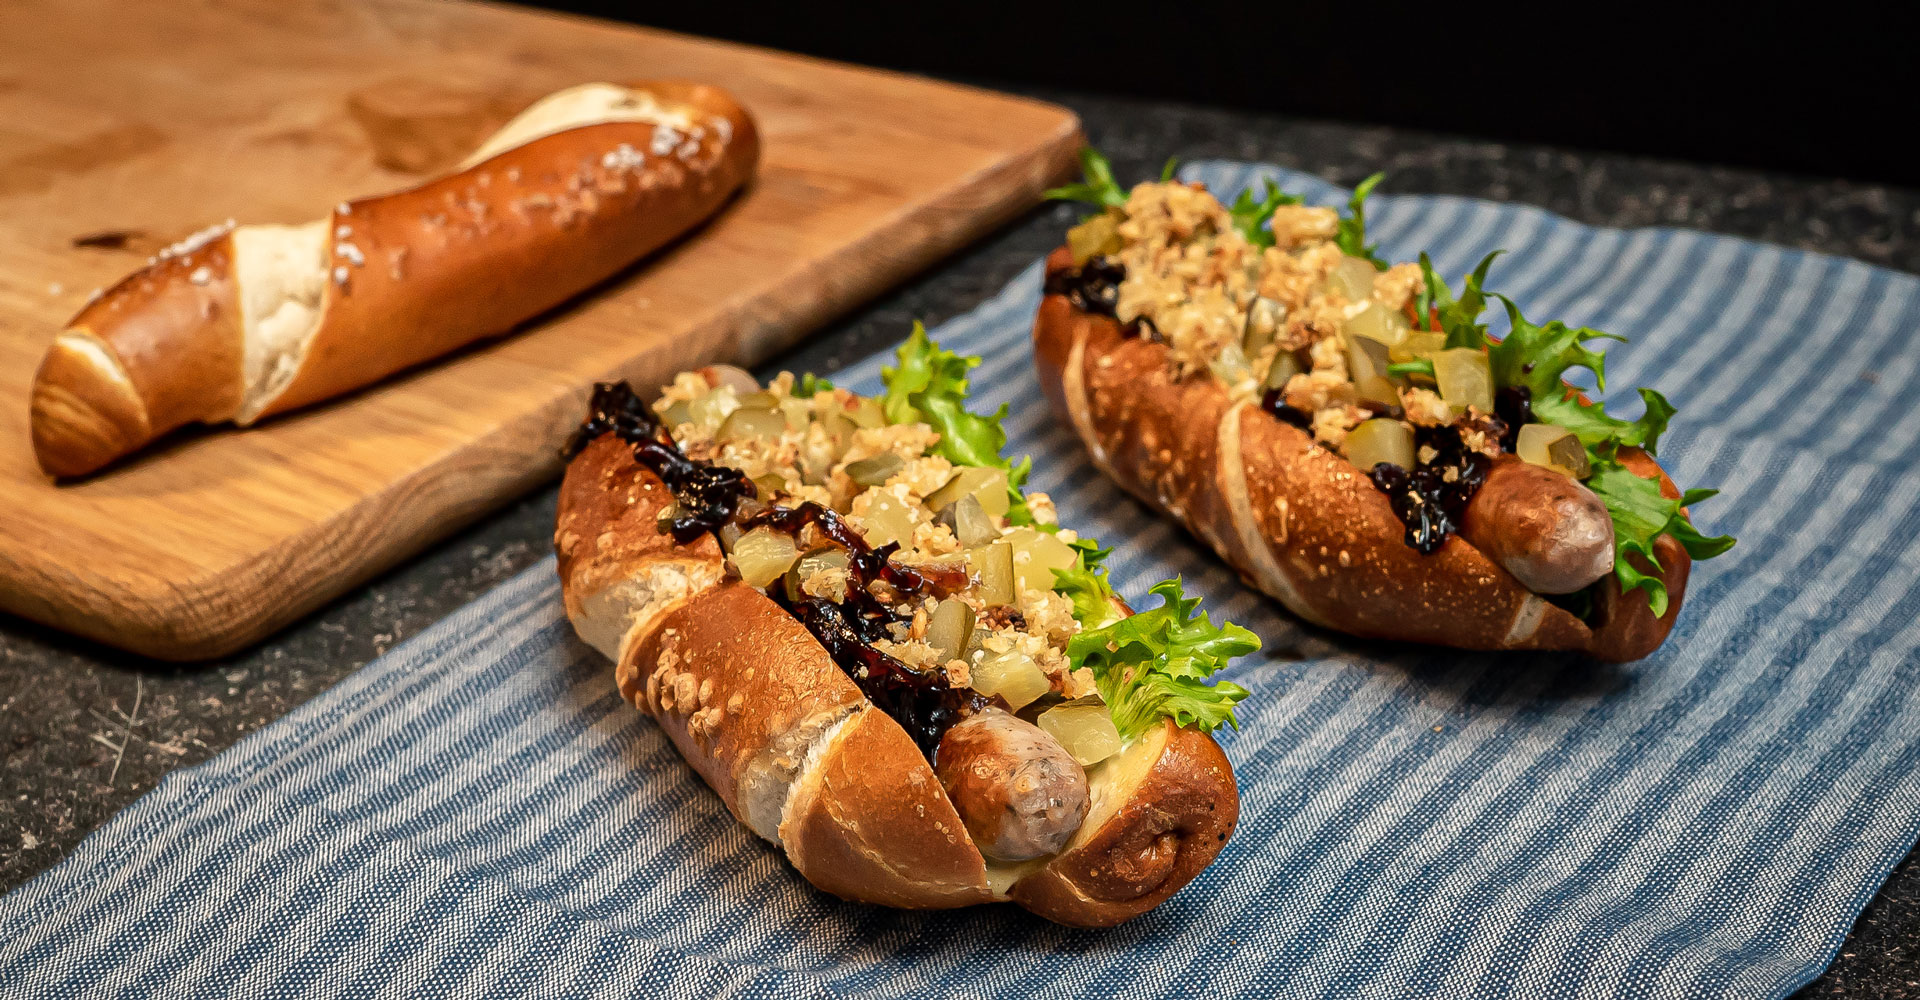 Pretzel hot dog with onion Jam and cauliflower & oat crumble